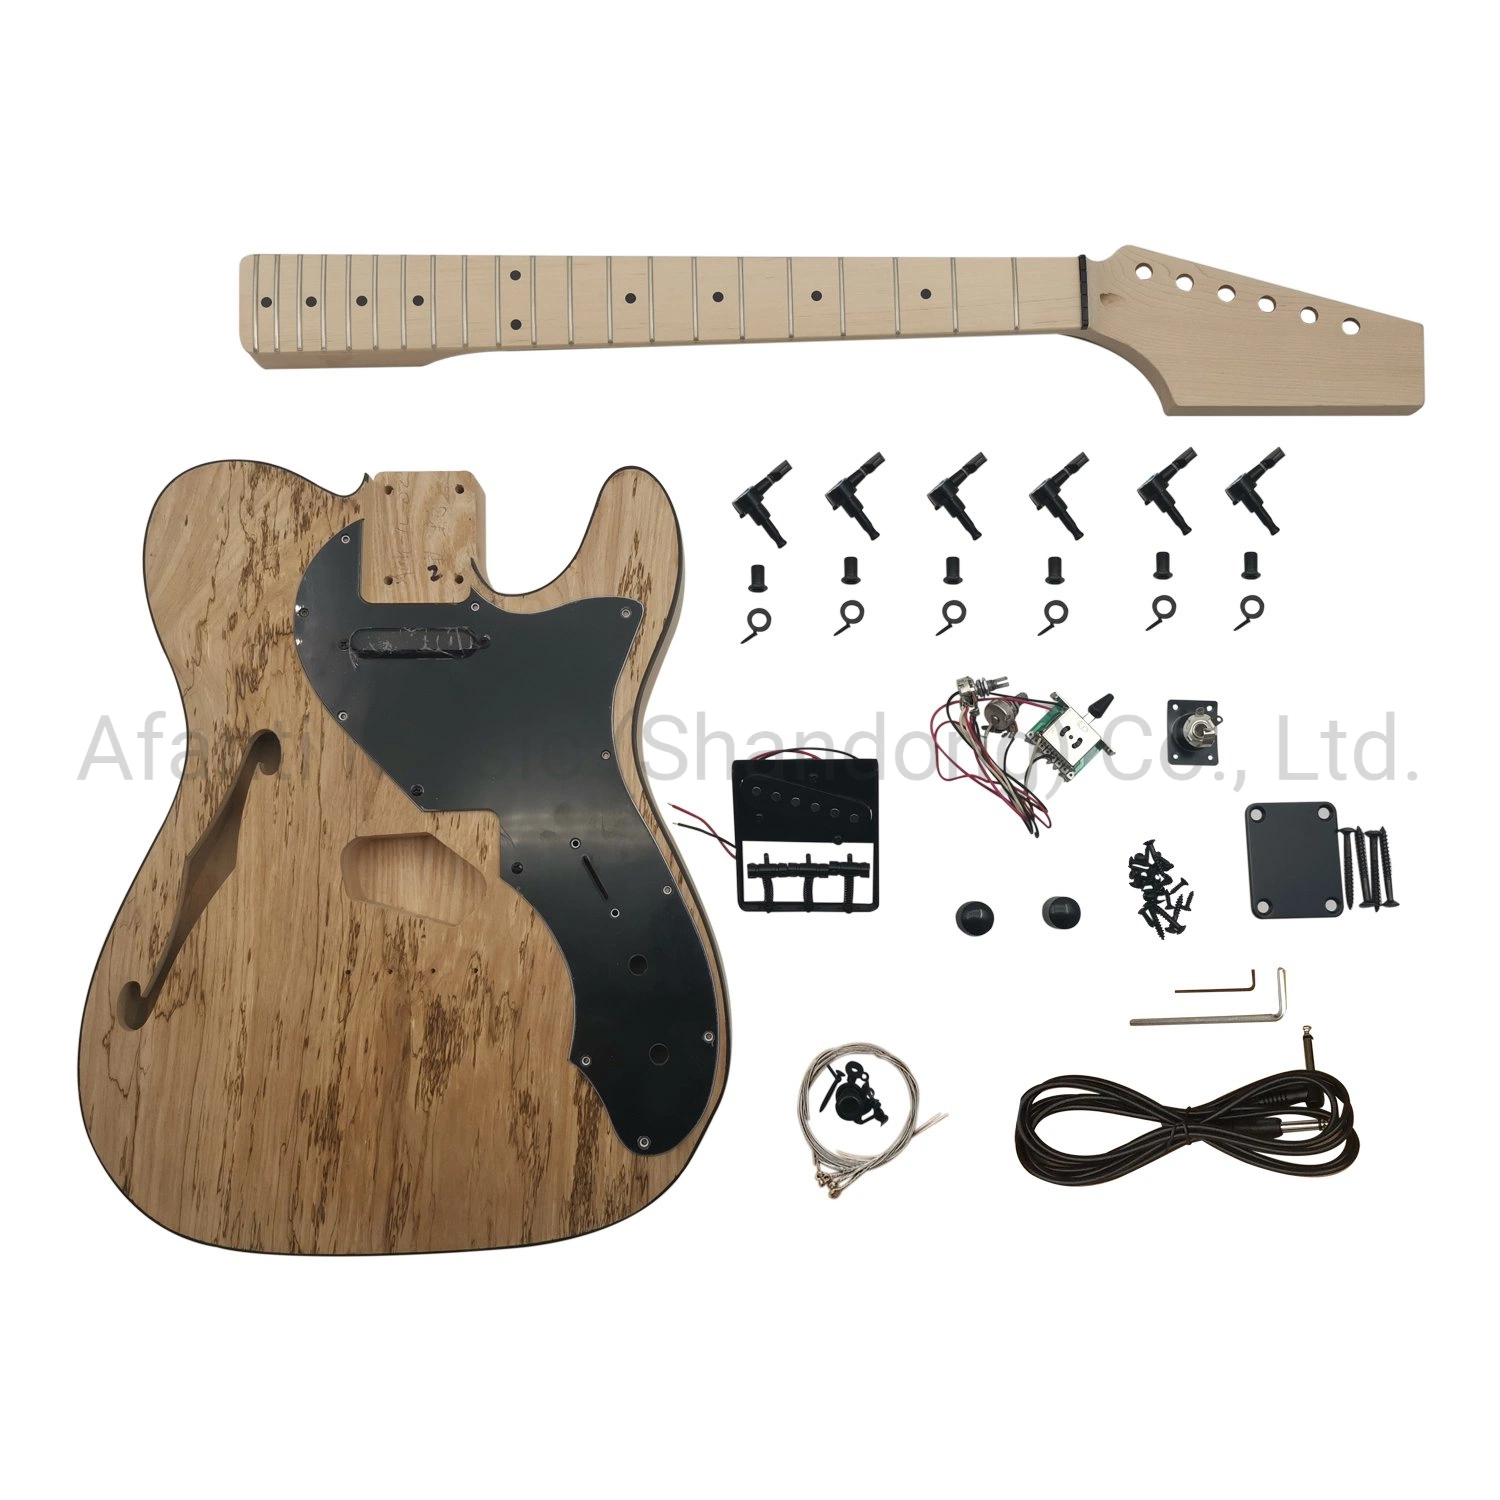 Afanti Ash Body Semi-Hollow Thinline Electric Guitar Kit